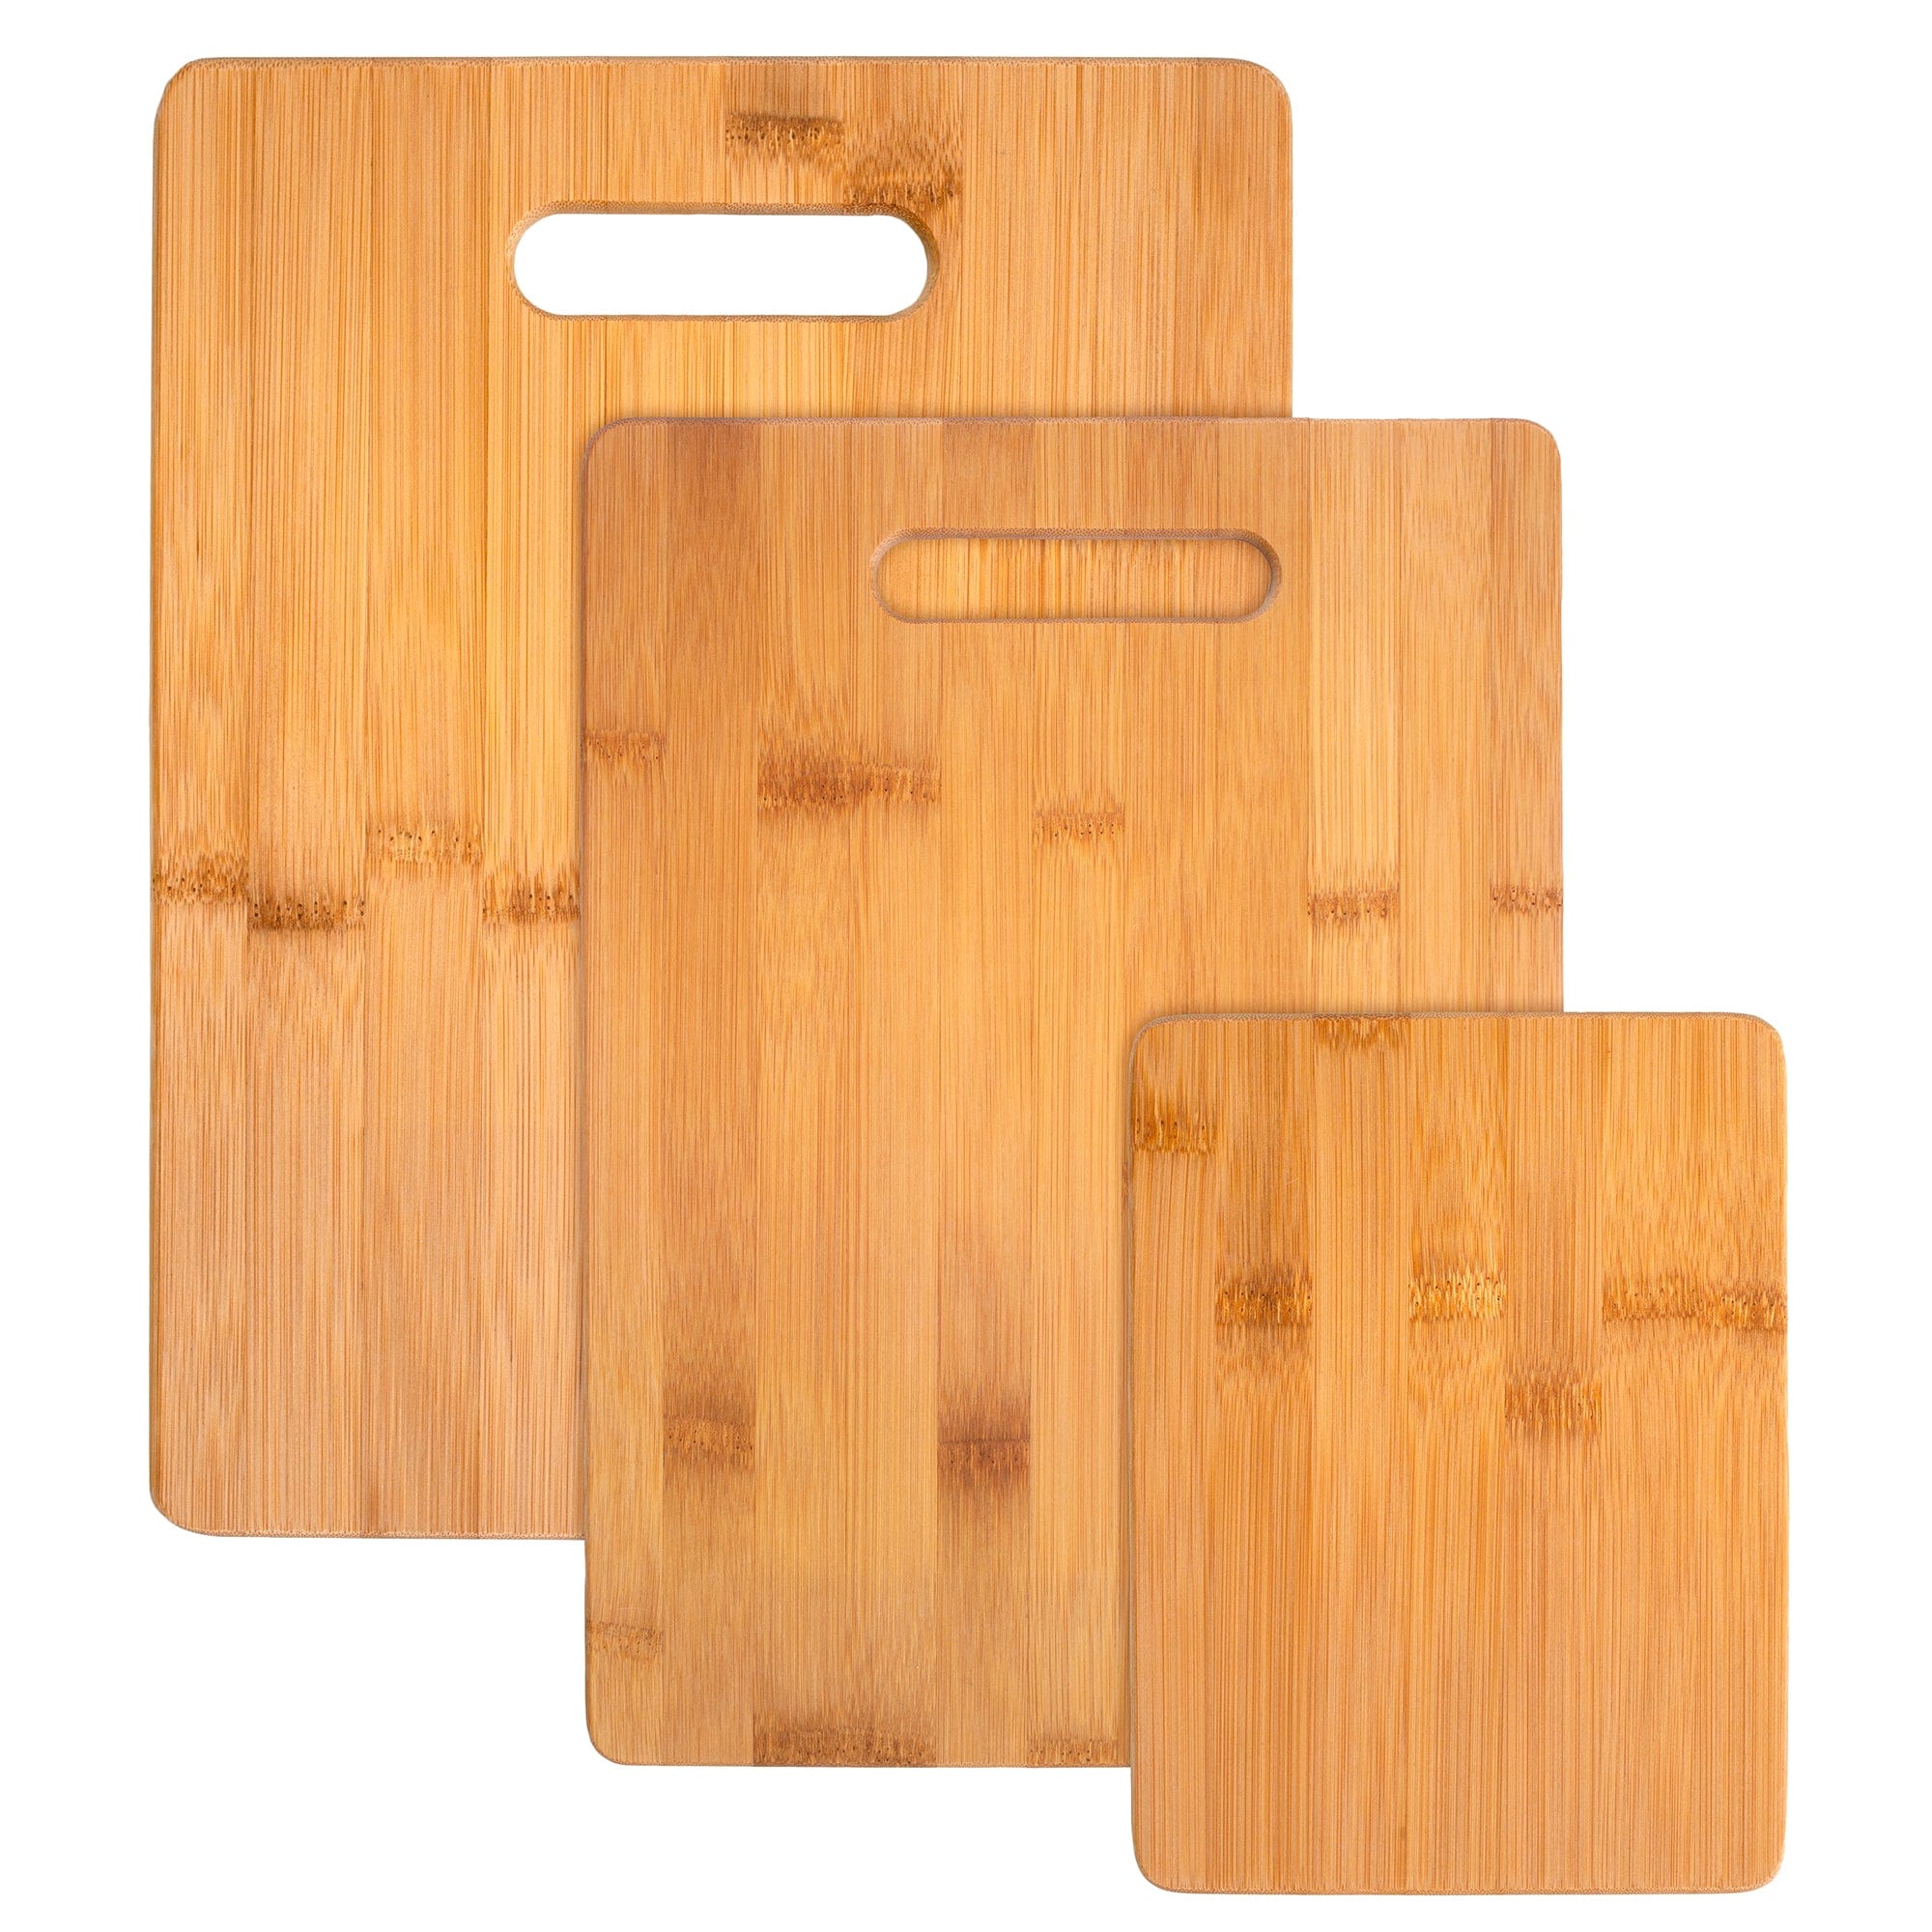 Gourmet Home Bamboo Cutting Board - 13x9